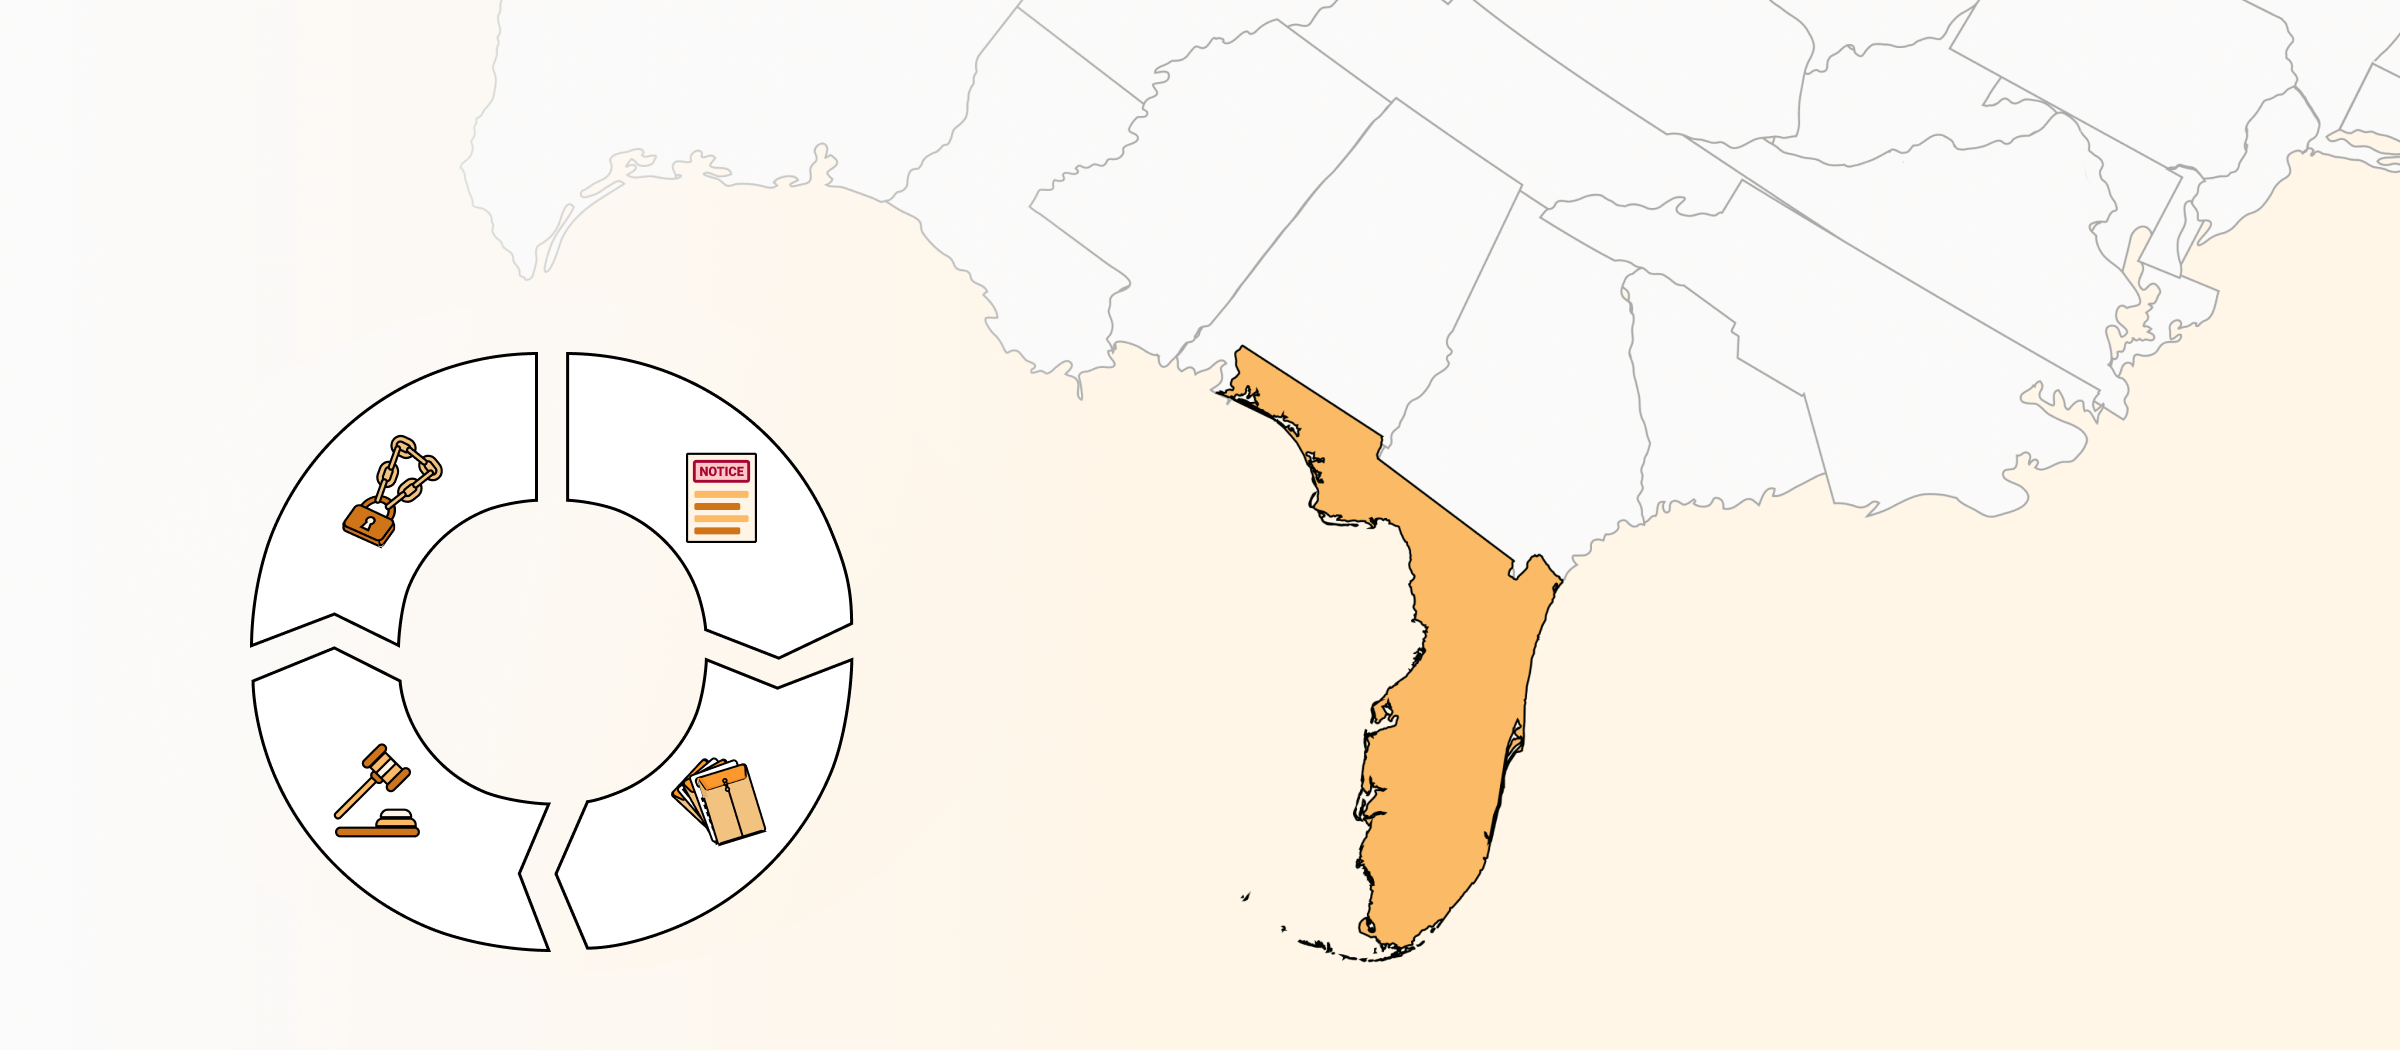 Florida Eviction Process